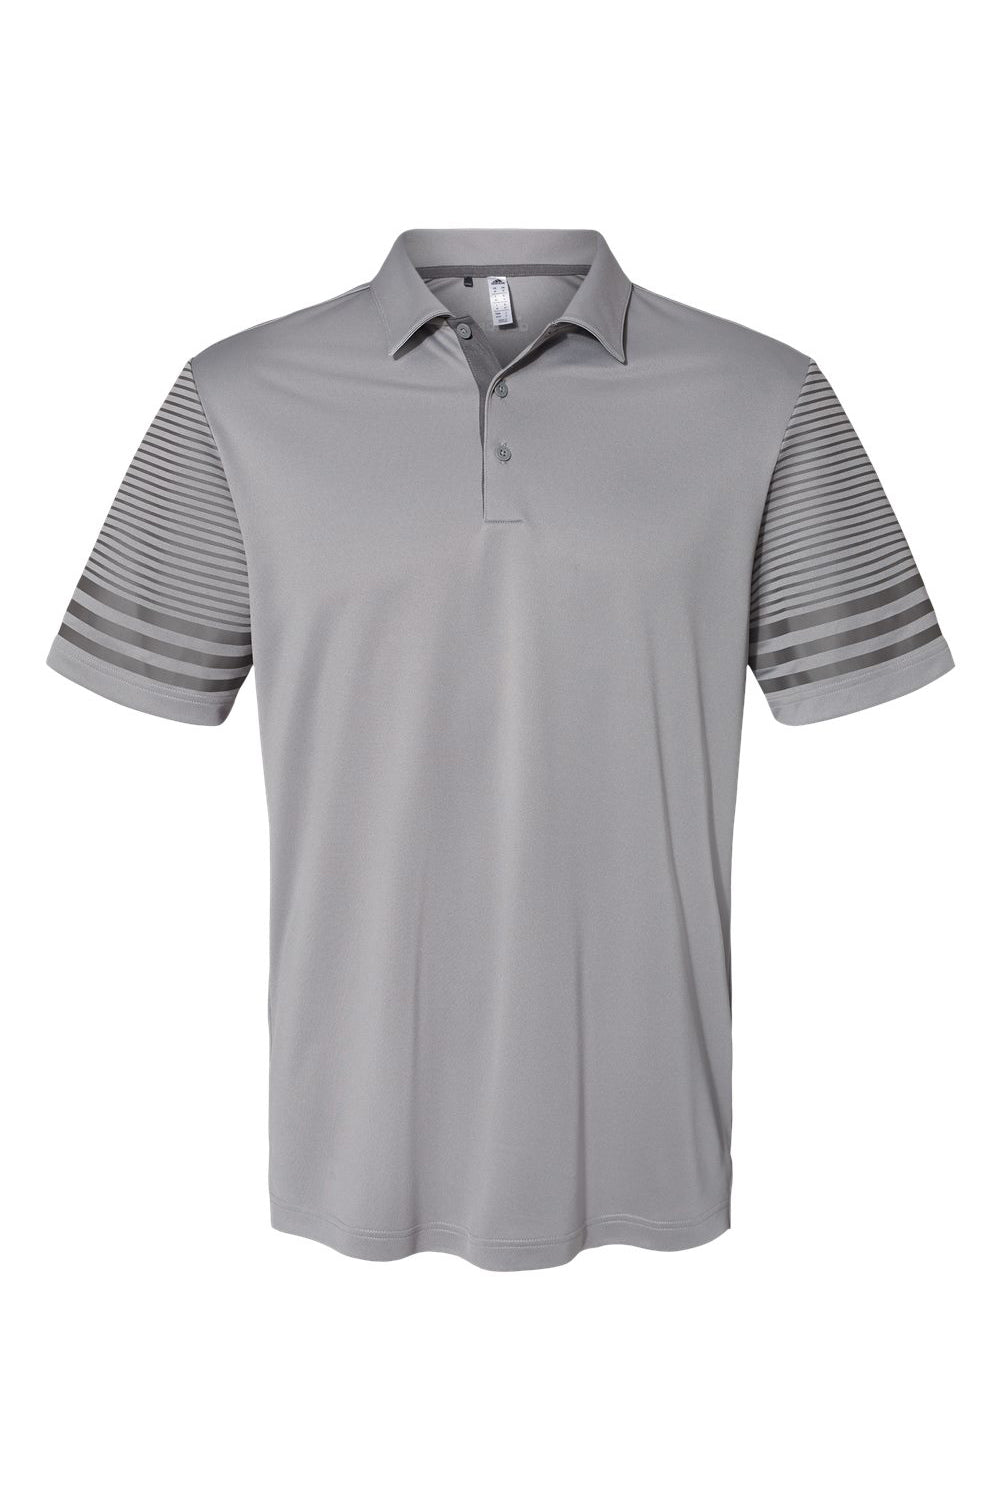 Adidas A490 Mens Striped Short Sleeve Polo Shirt Grey/Grey Flat Front